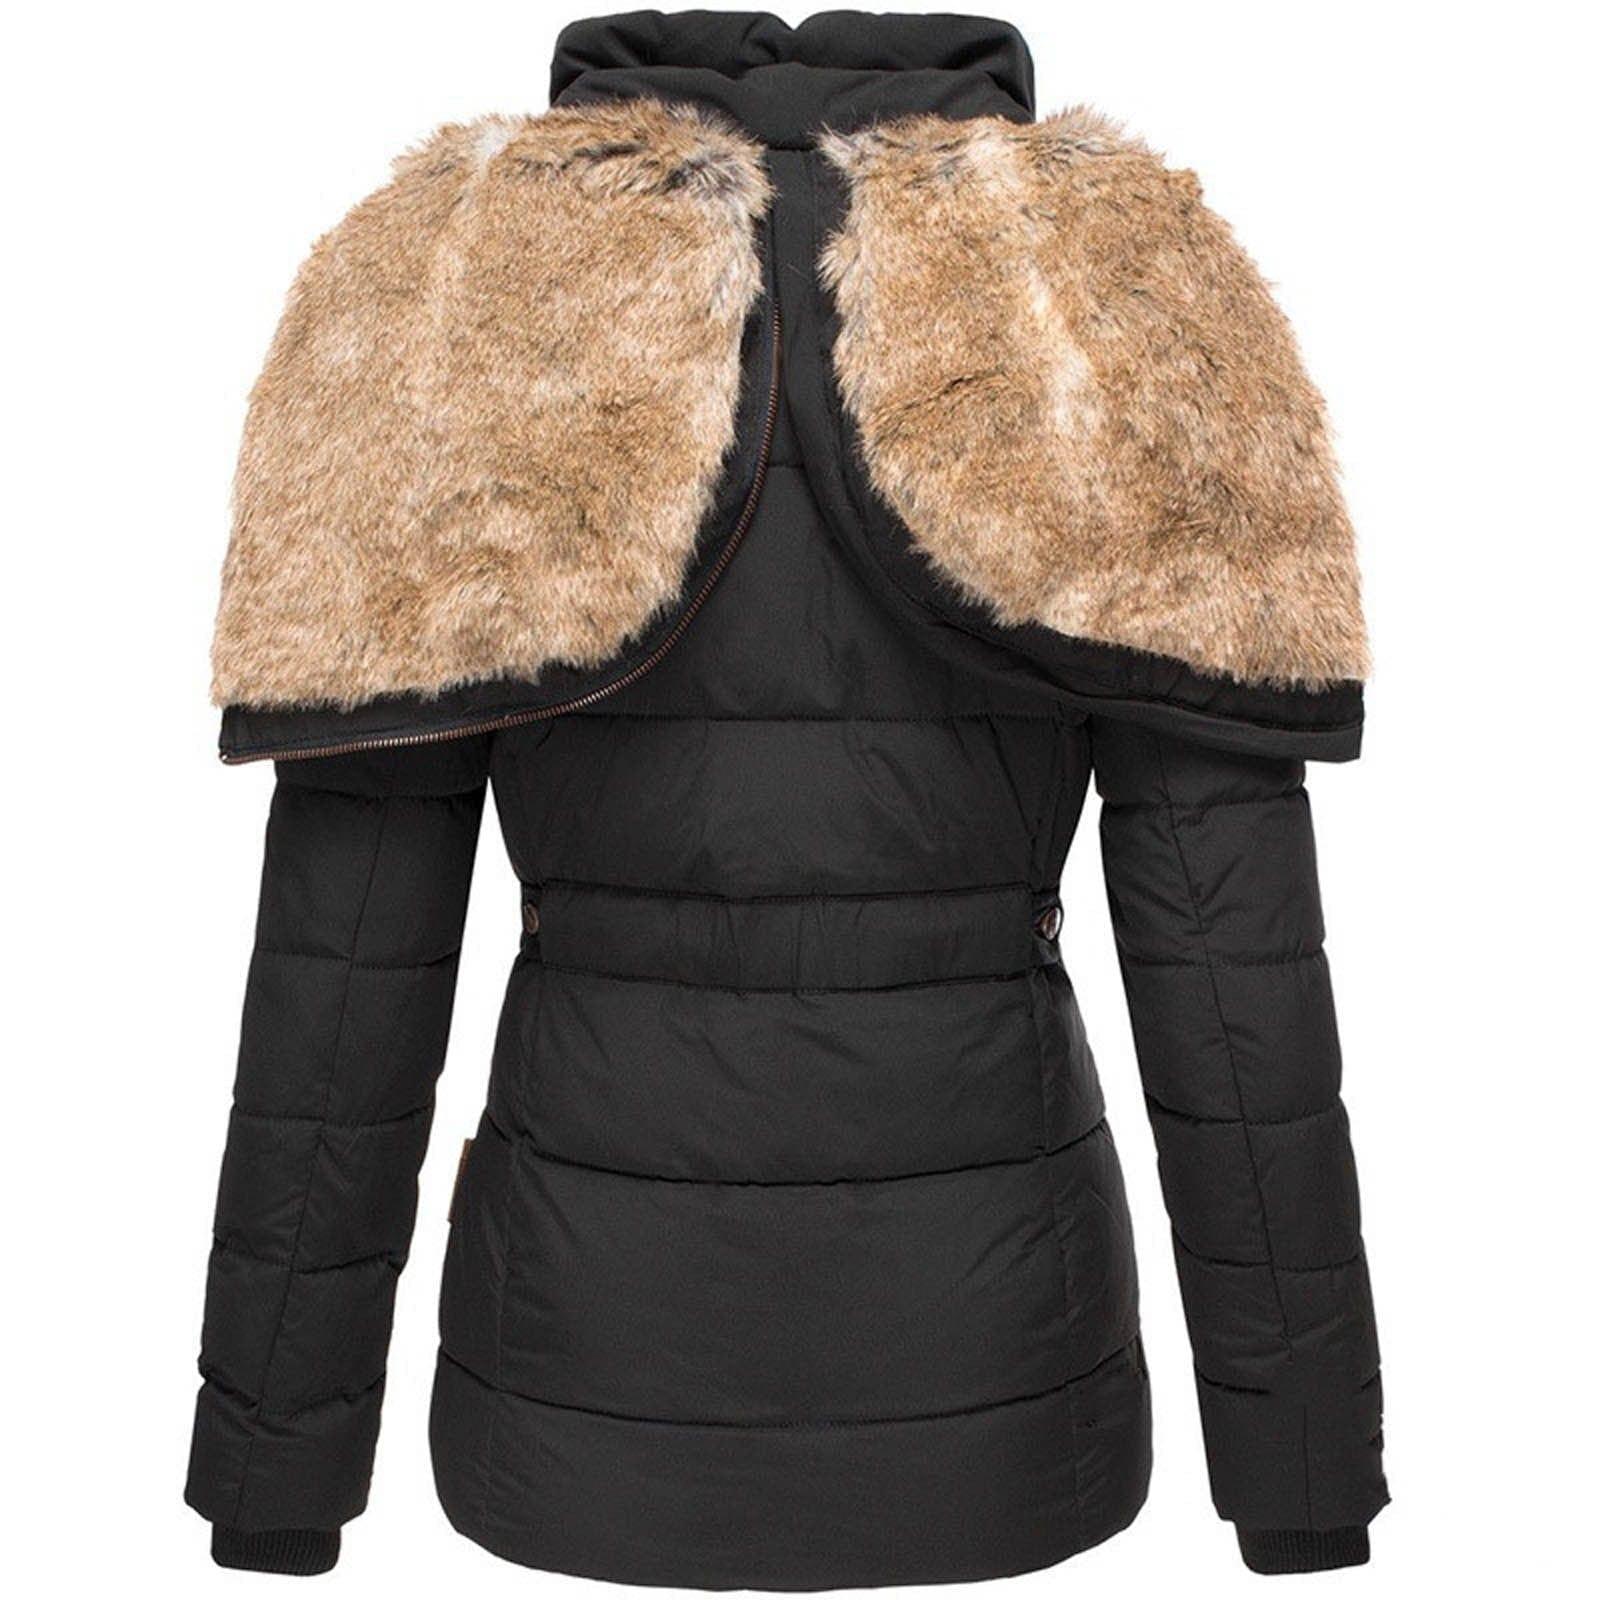 Cotton Padded Fur Parka Winter Jacket - For Women USA